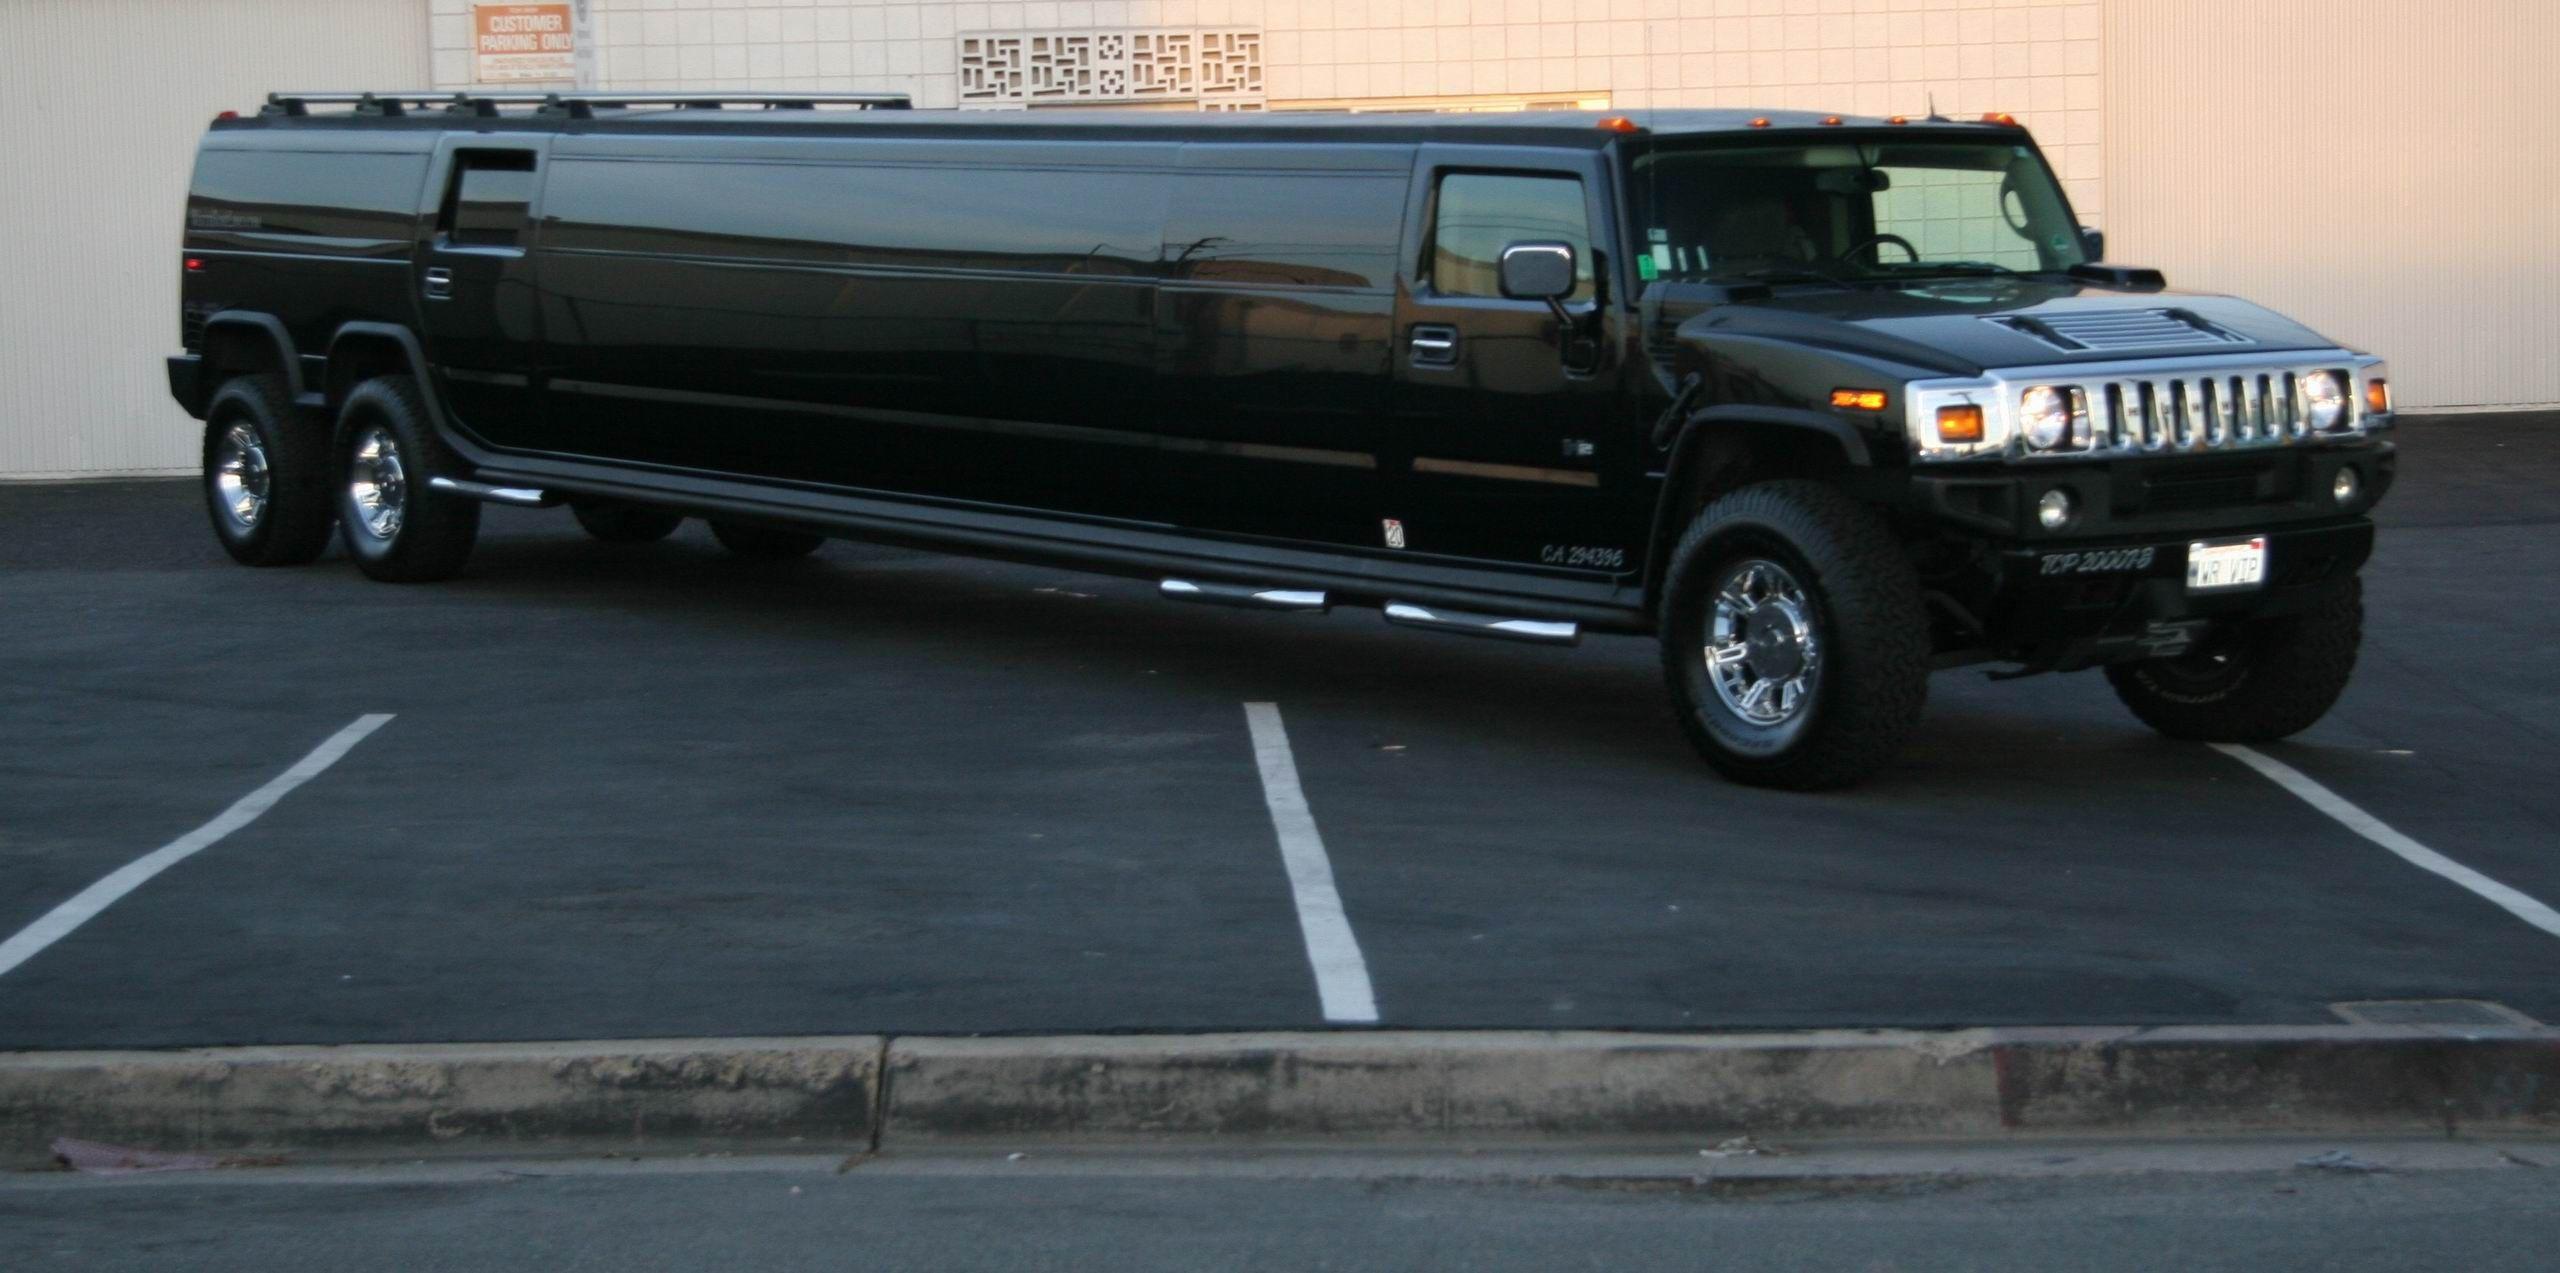 Black Hummer H2 Limousine de 2012 en Los Angeles, California, USA